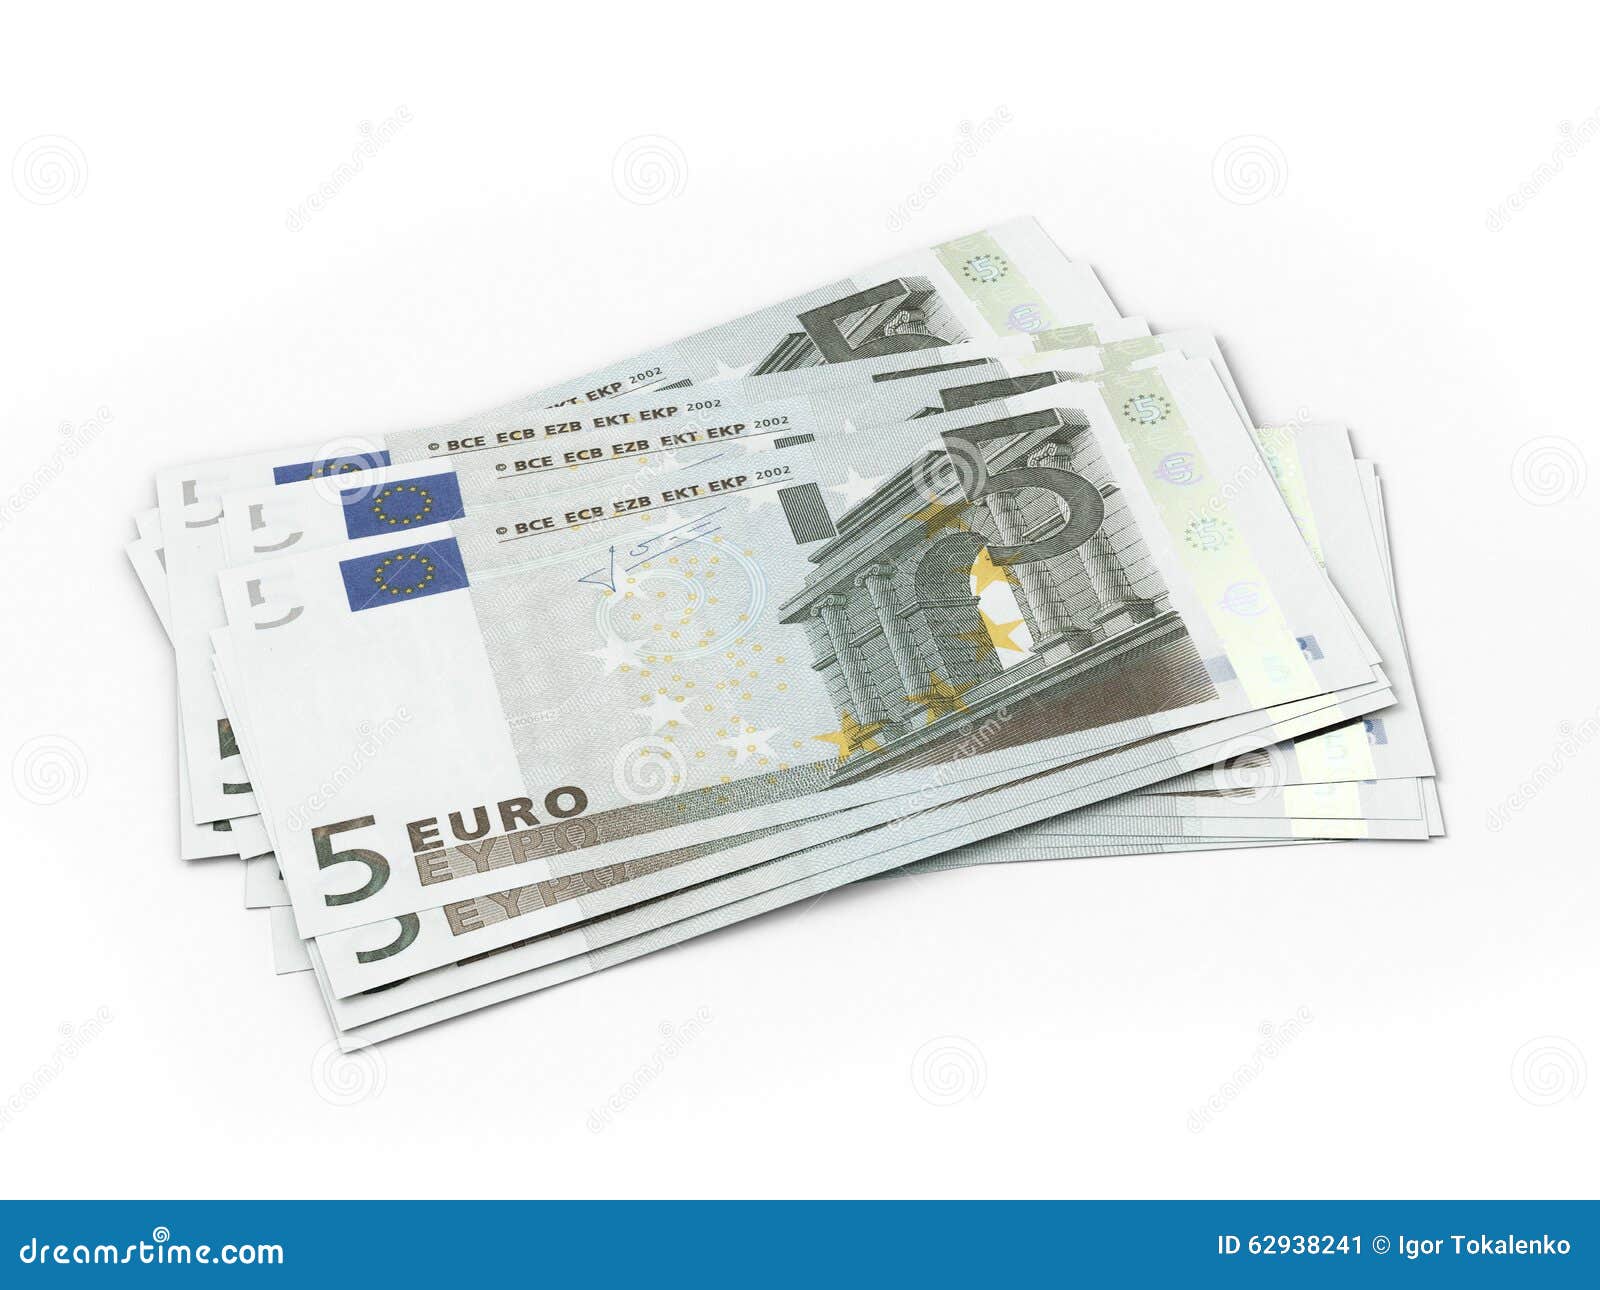 5 евро в долларах. Банковские бумаги. 5 Евро банкнота. Евро купюра на белом фоне. 5 Евро в рублях.